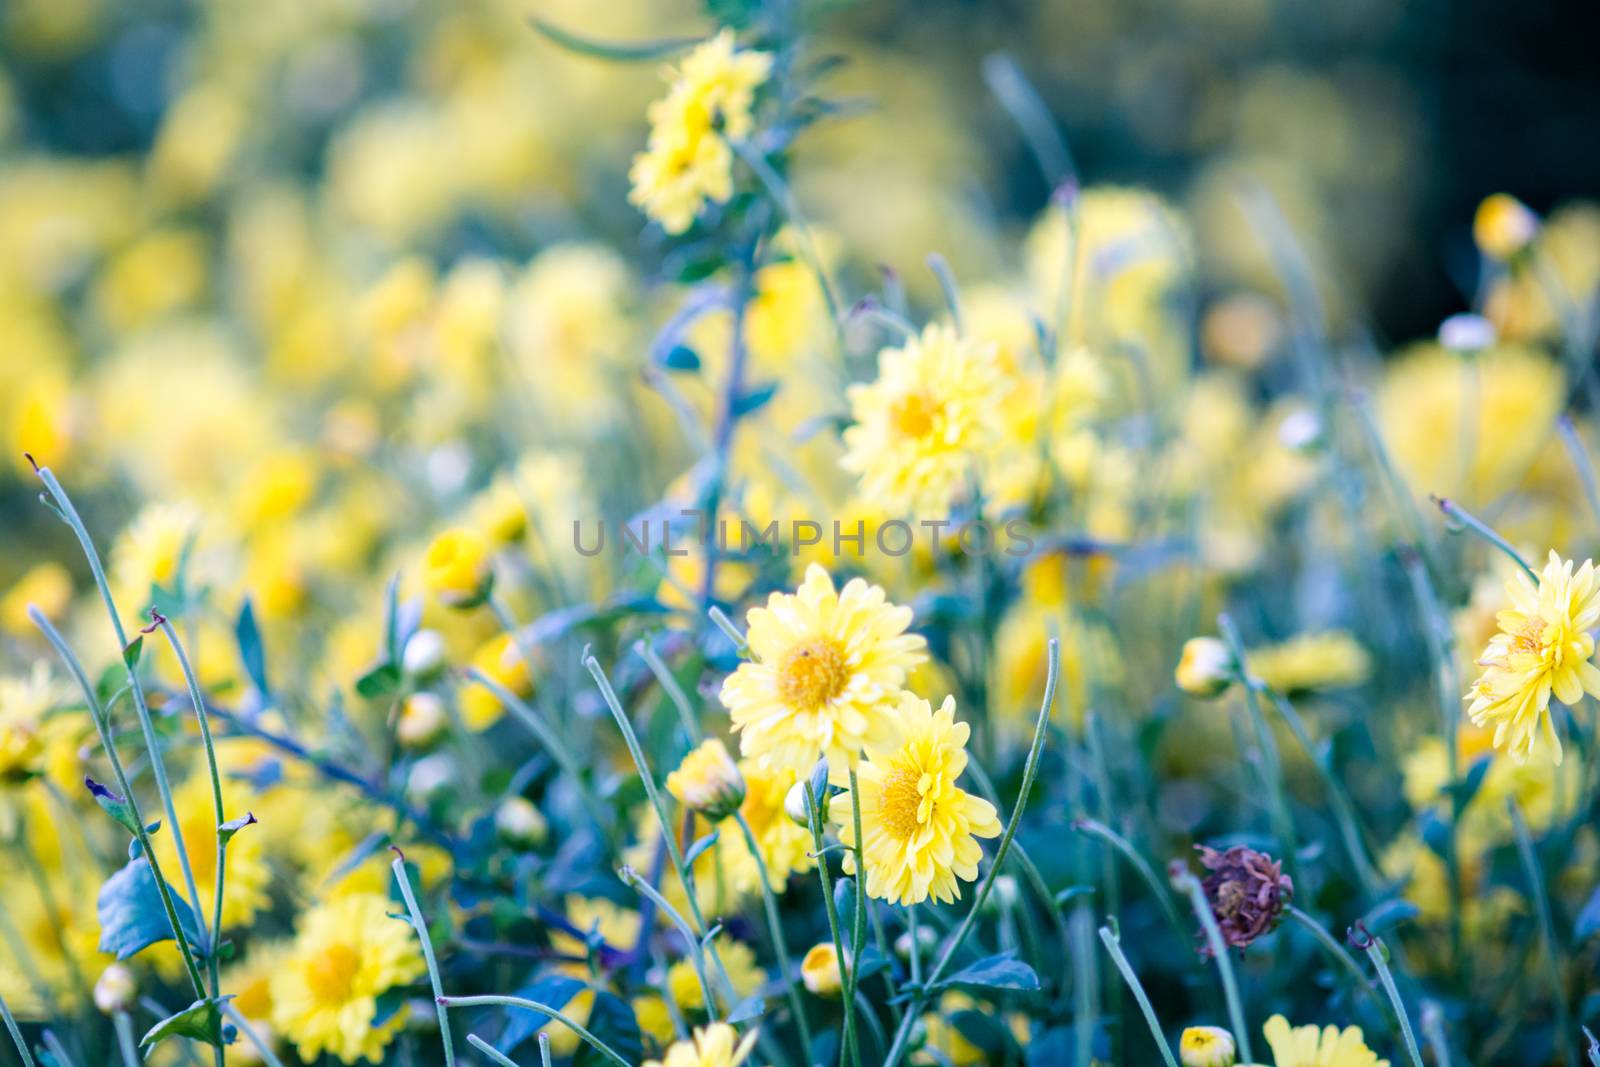 Yellow chrysanthemum flowers, chrysanthemum in the garden. Blurr by yuiyuize